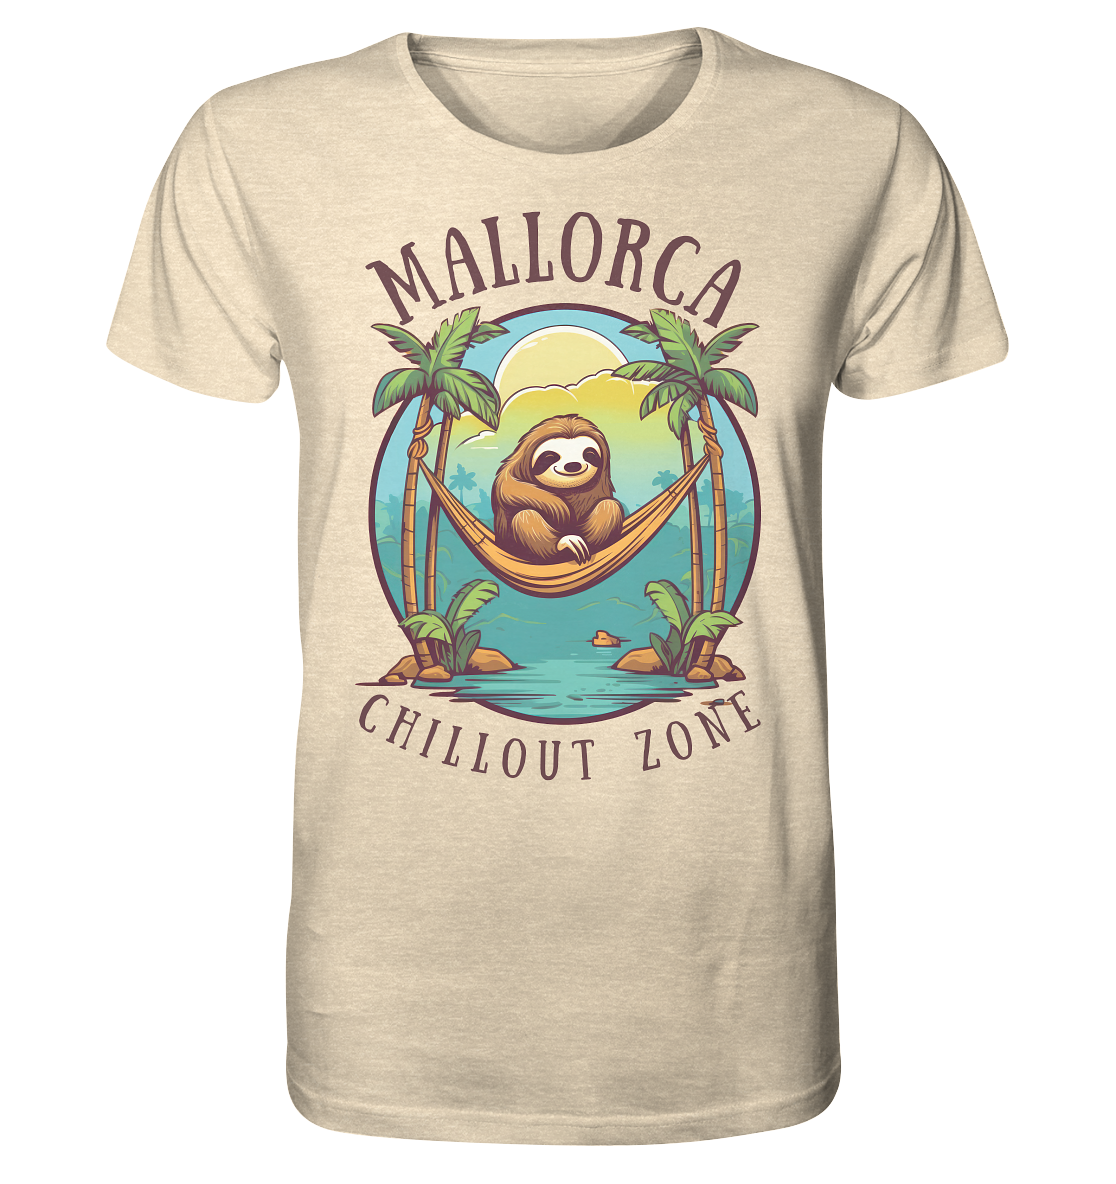 Mallorca Chillout Zone • Organic Shirt • Chicos